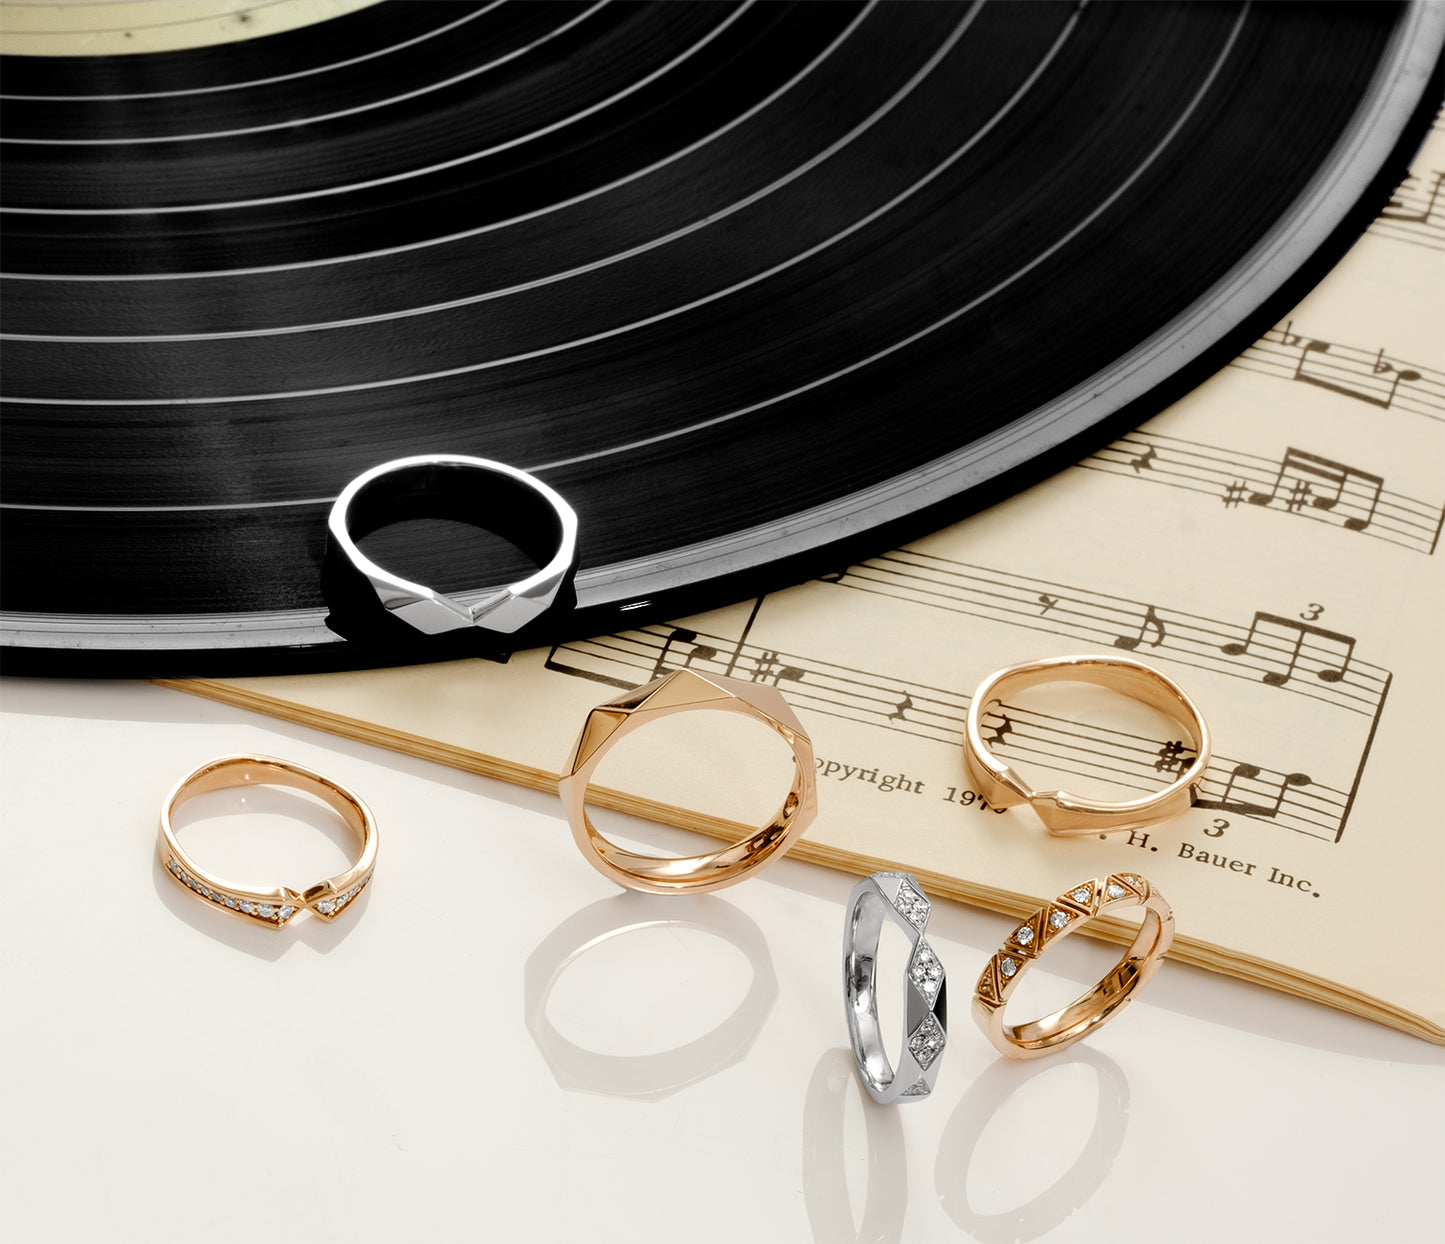 THIALH - ROMAnce • CRYSTAL CHAPEL - Diamond in White Gold Wedding Ring